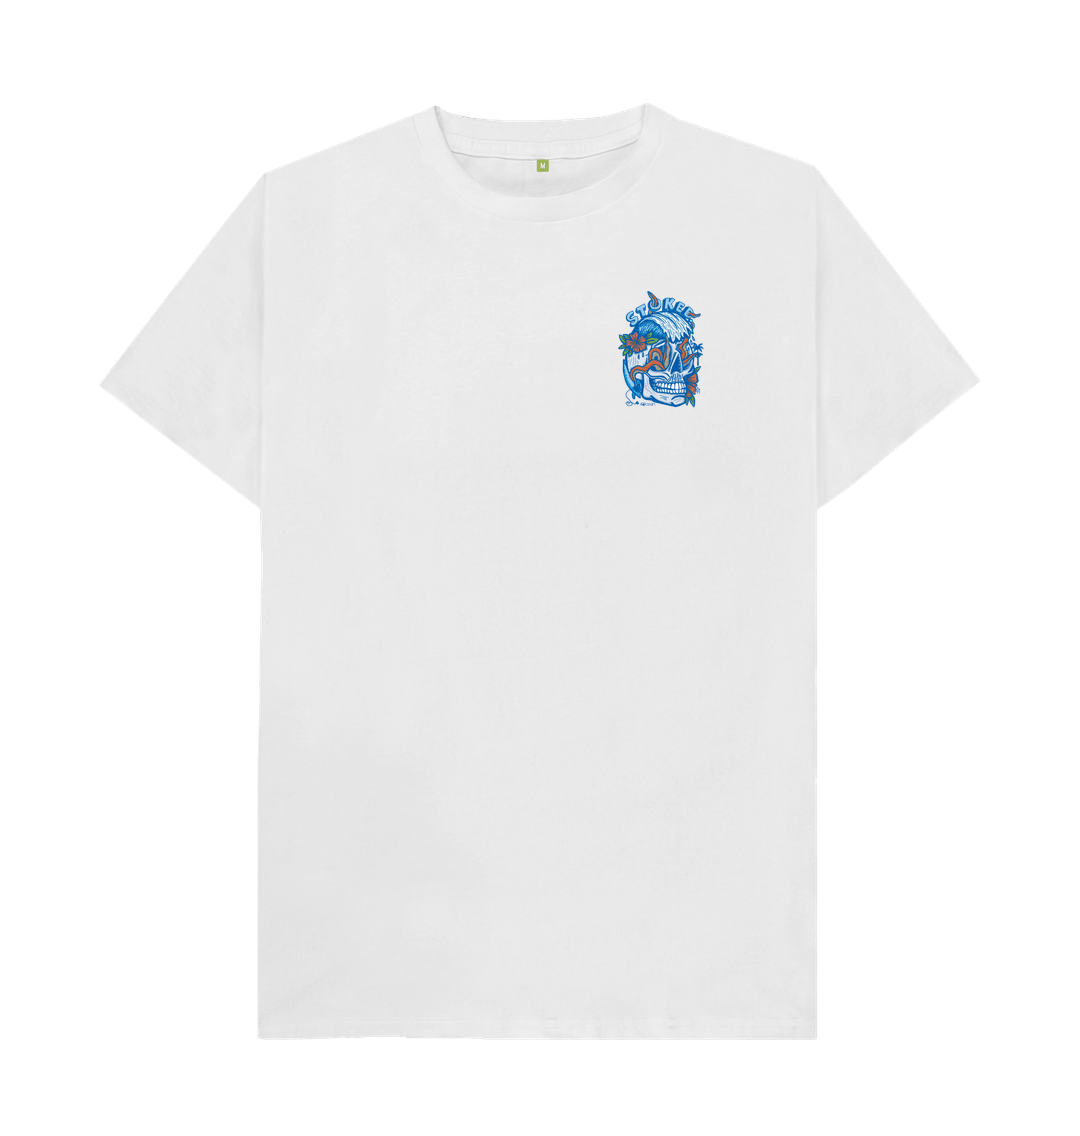 stoked_design_shirt_white